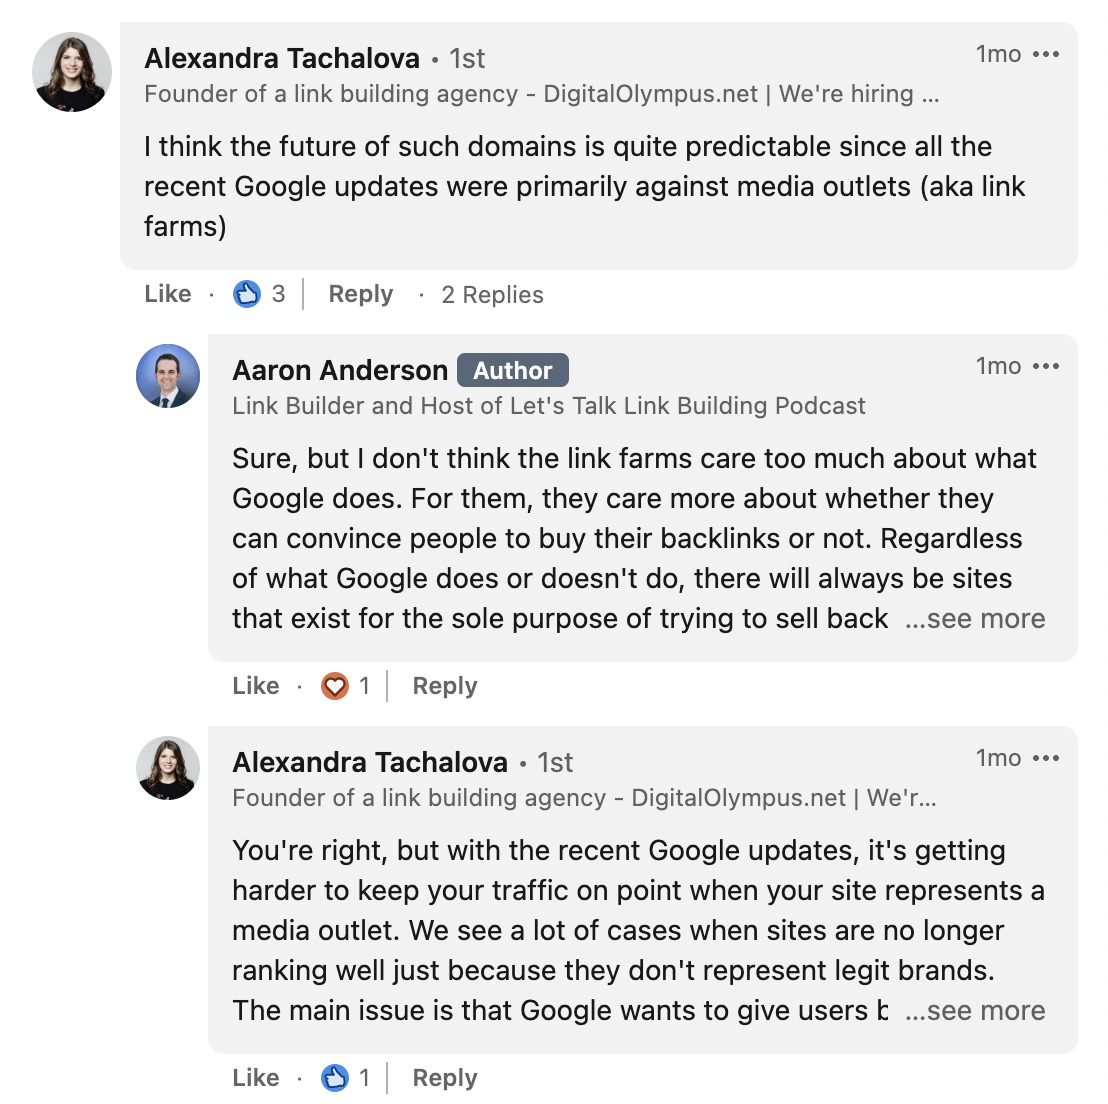 Interaction between Alexandra Tachalova and Aaron Anderson in LinkedIn comments
